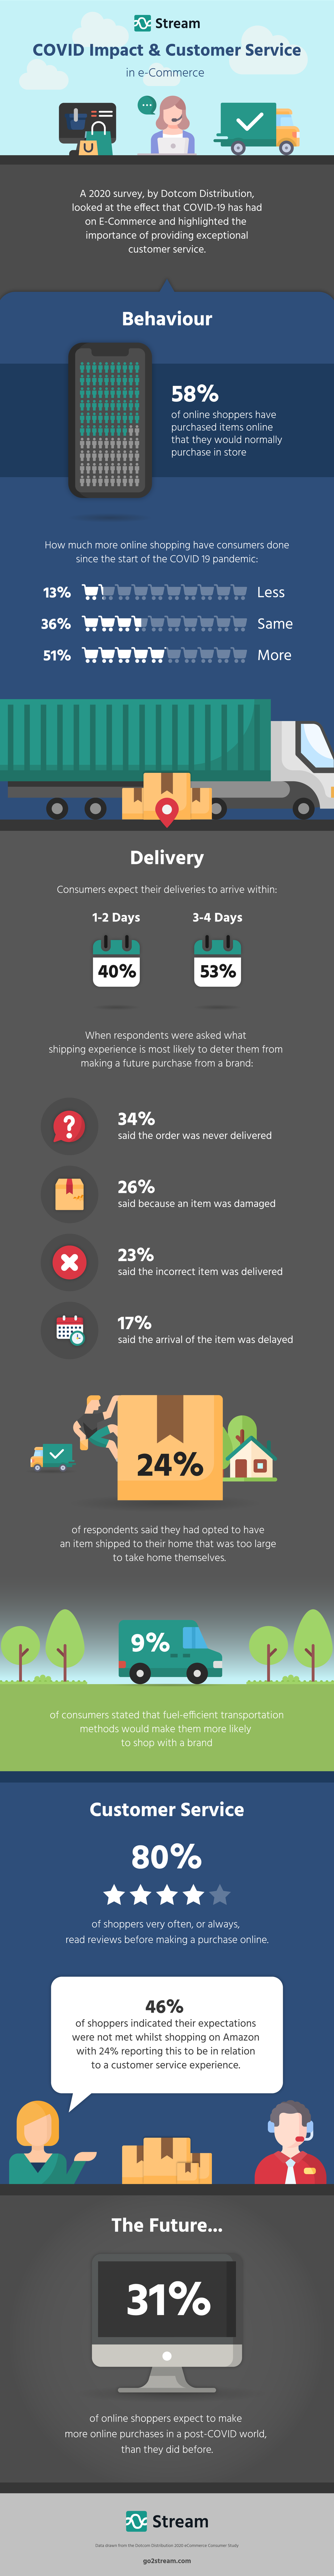 Covid-Impact-Customer-Service-Infographic